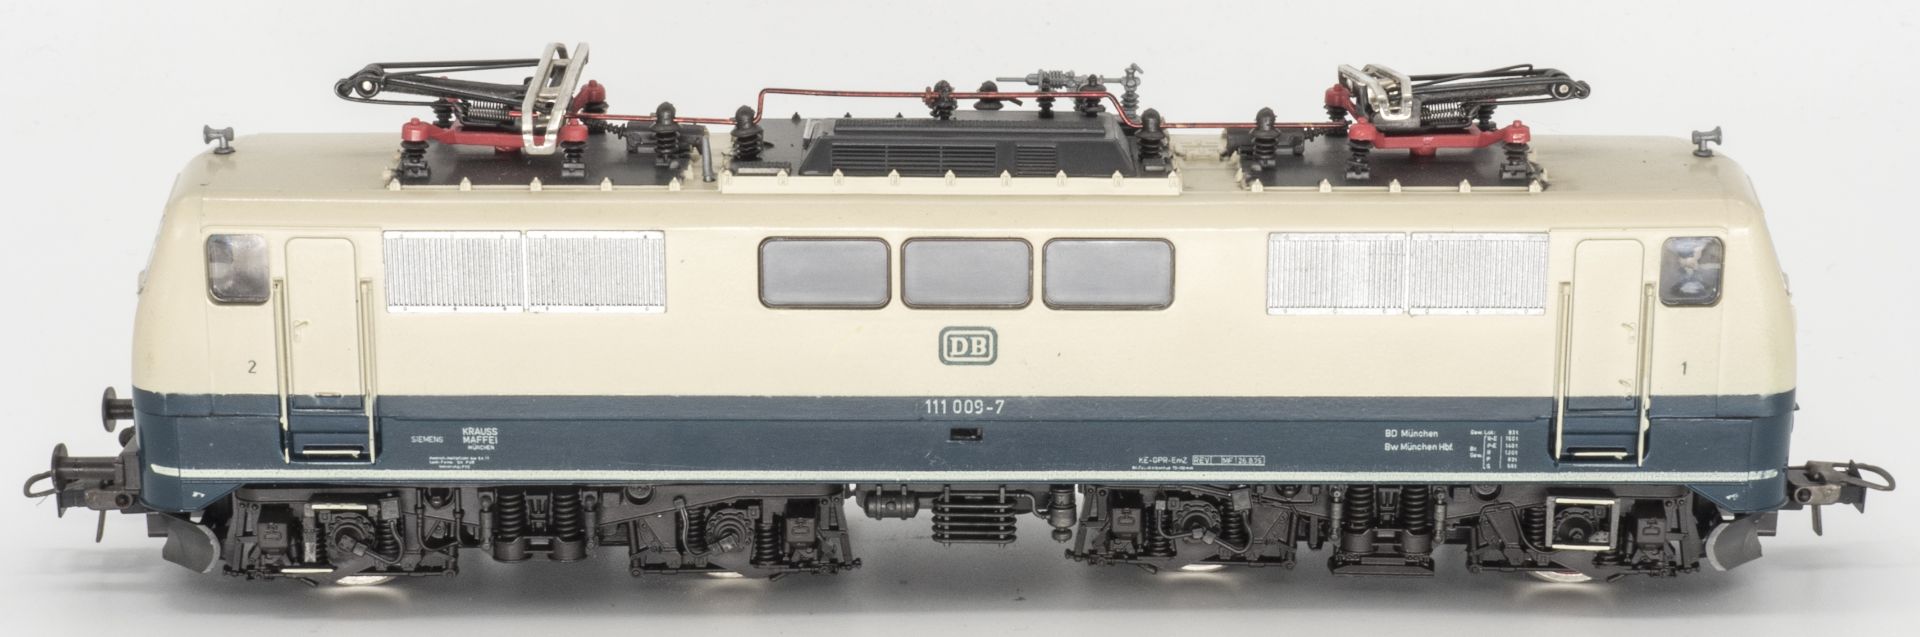 Roco E - Lokomotive BR 11, BN 111 009-7. Spur H0. Ohne OVP. *.